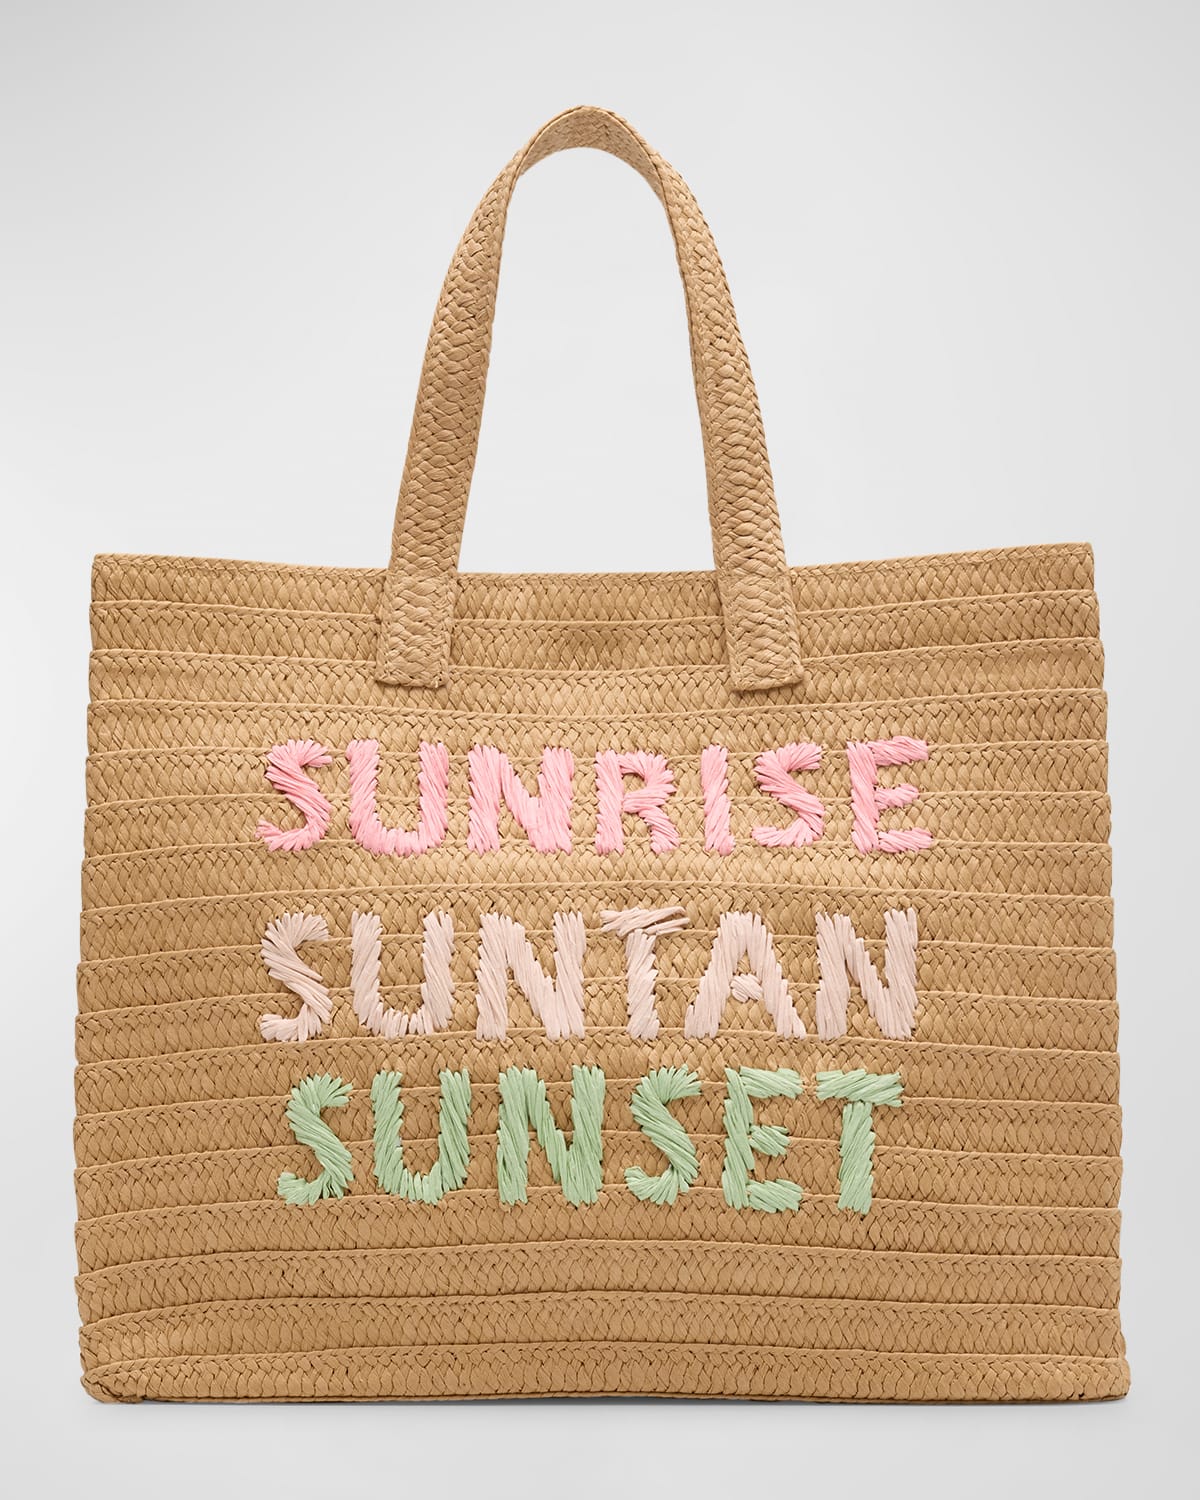 Sunrise Suntan Sunset Straw Tote Bag